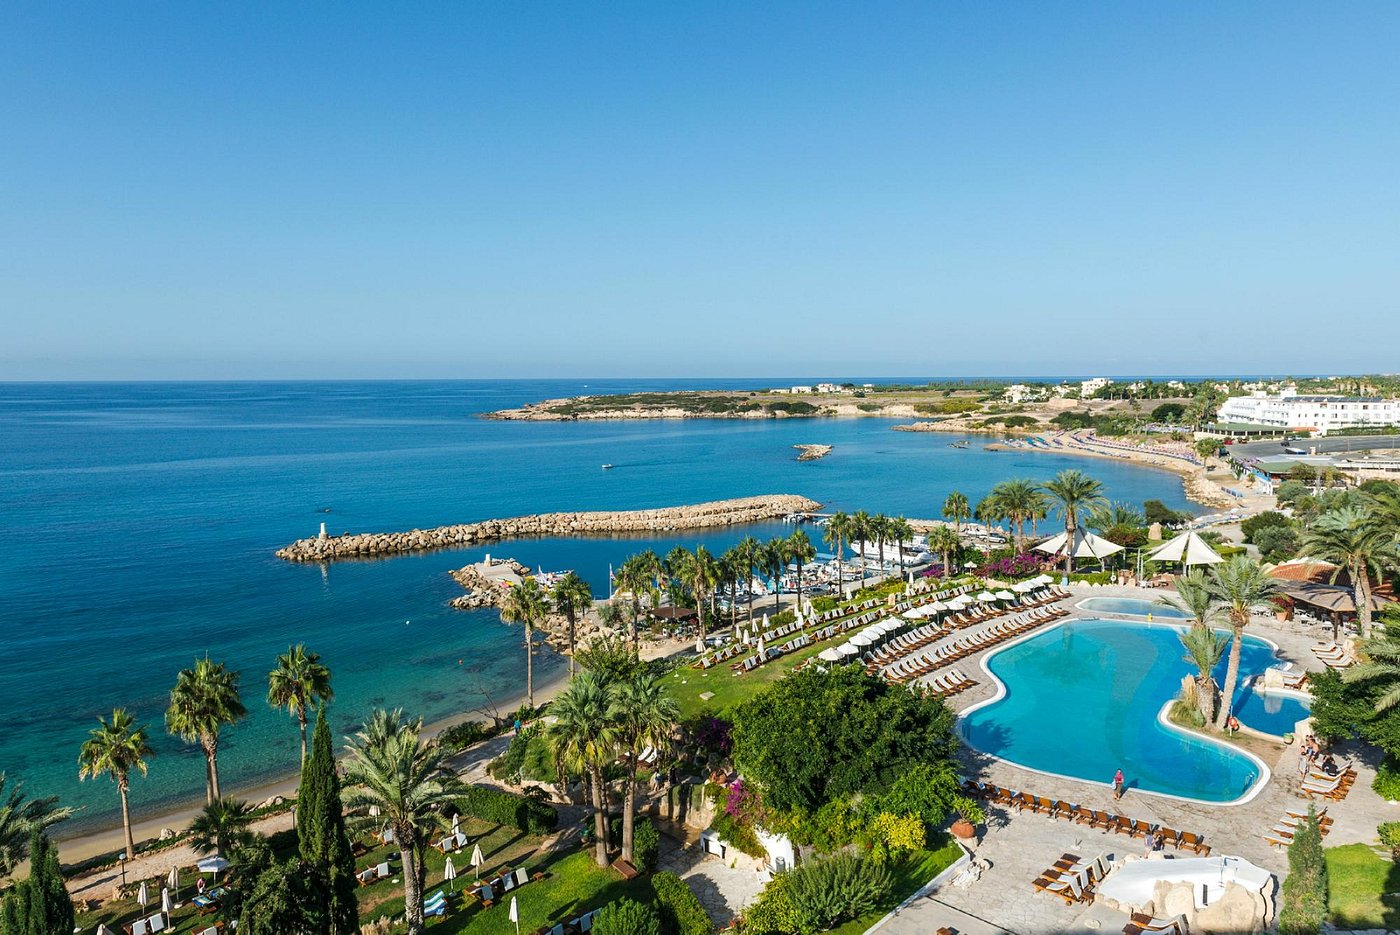 Coral beach отзывы. Корал Бич отель Пафос Кипр. Coral Beach Hotel & Resort 5*. Корал Бич Резорт Кипр. Пафос / Paphos Coral Beach Hotel & Resort 5.